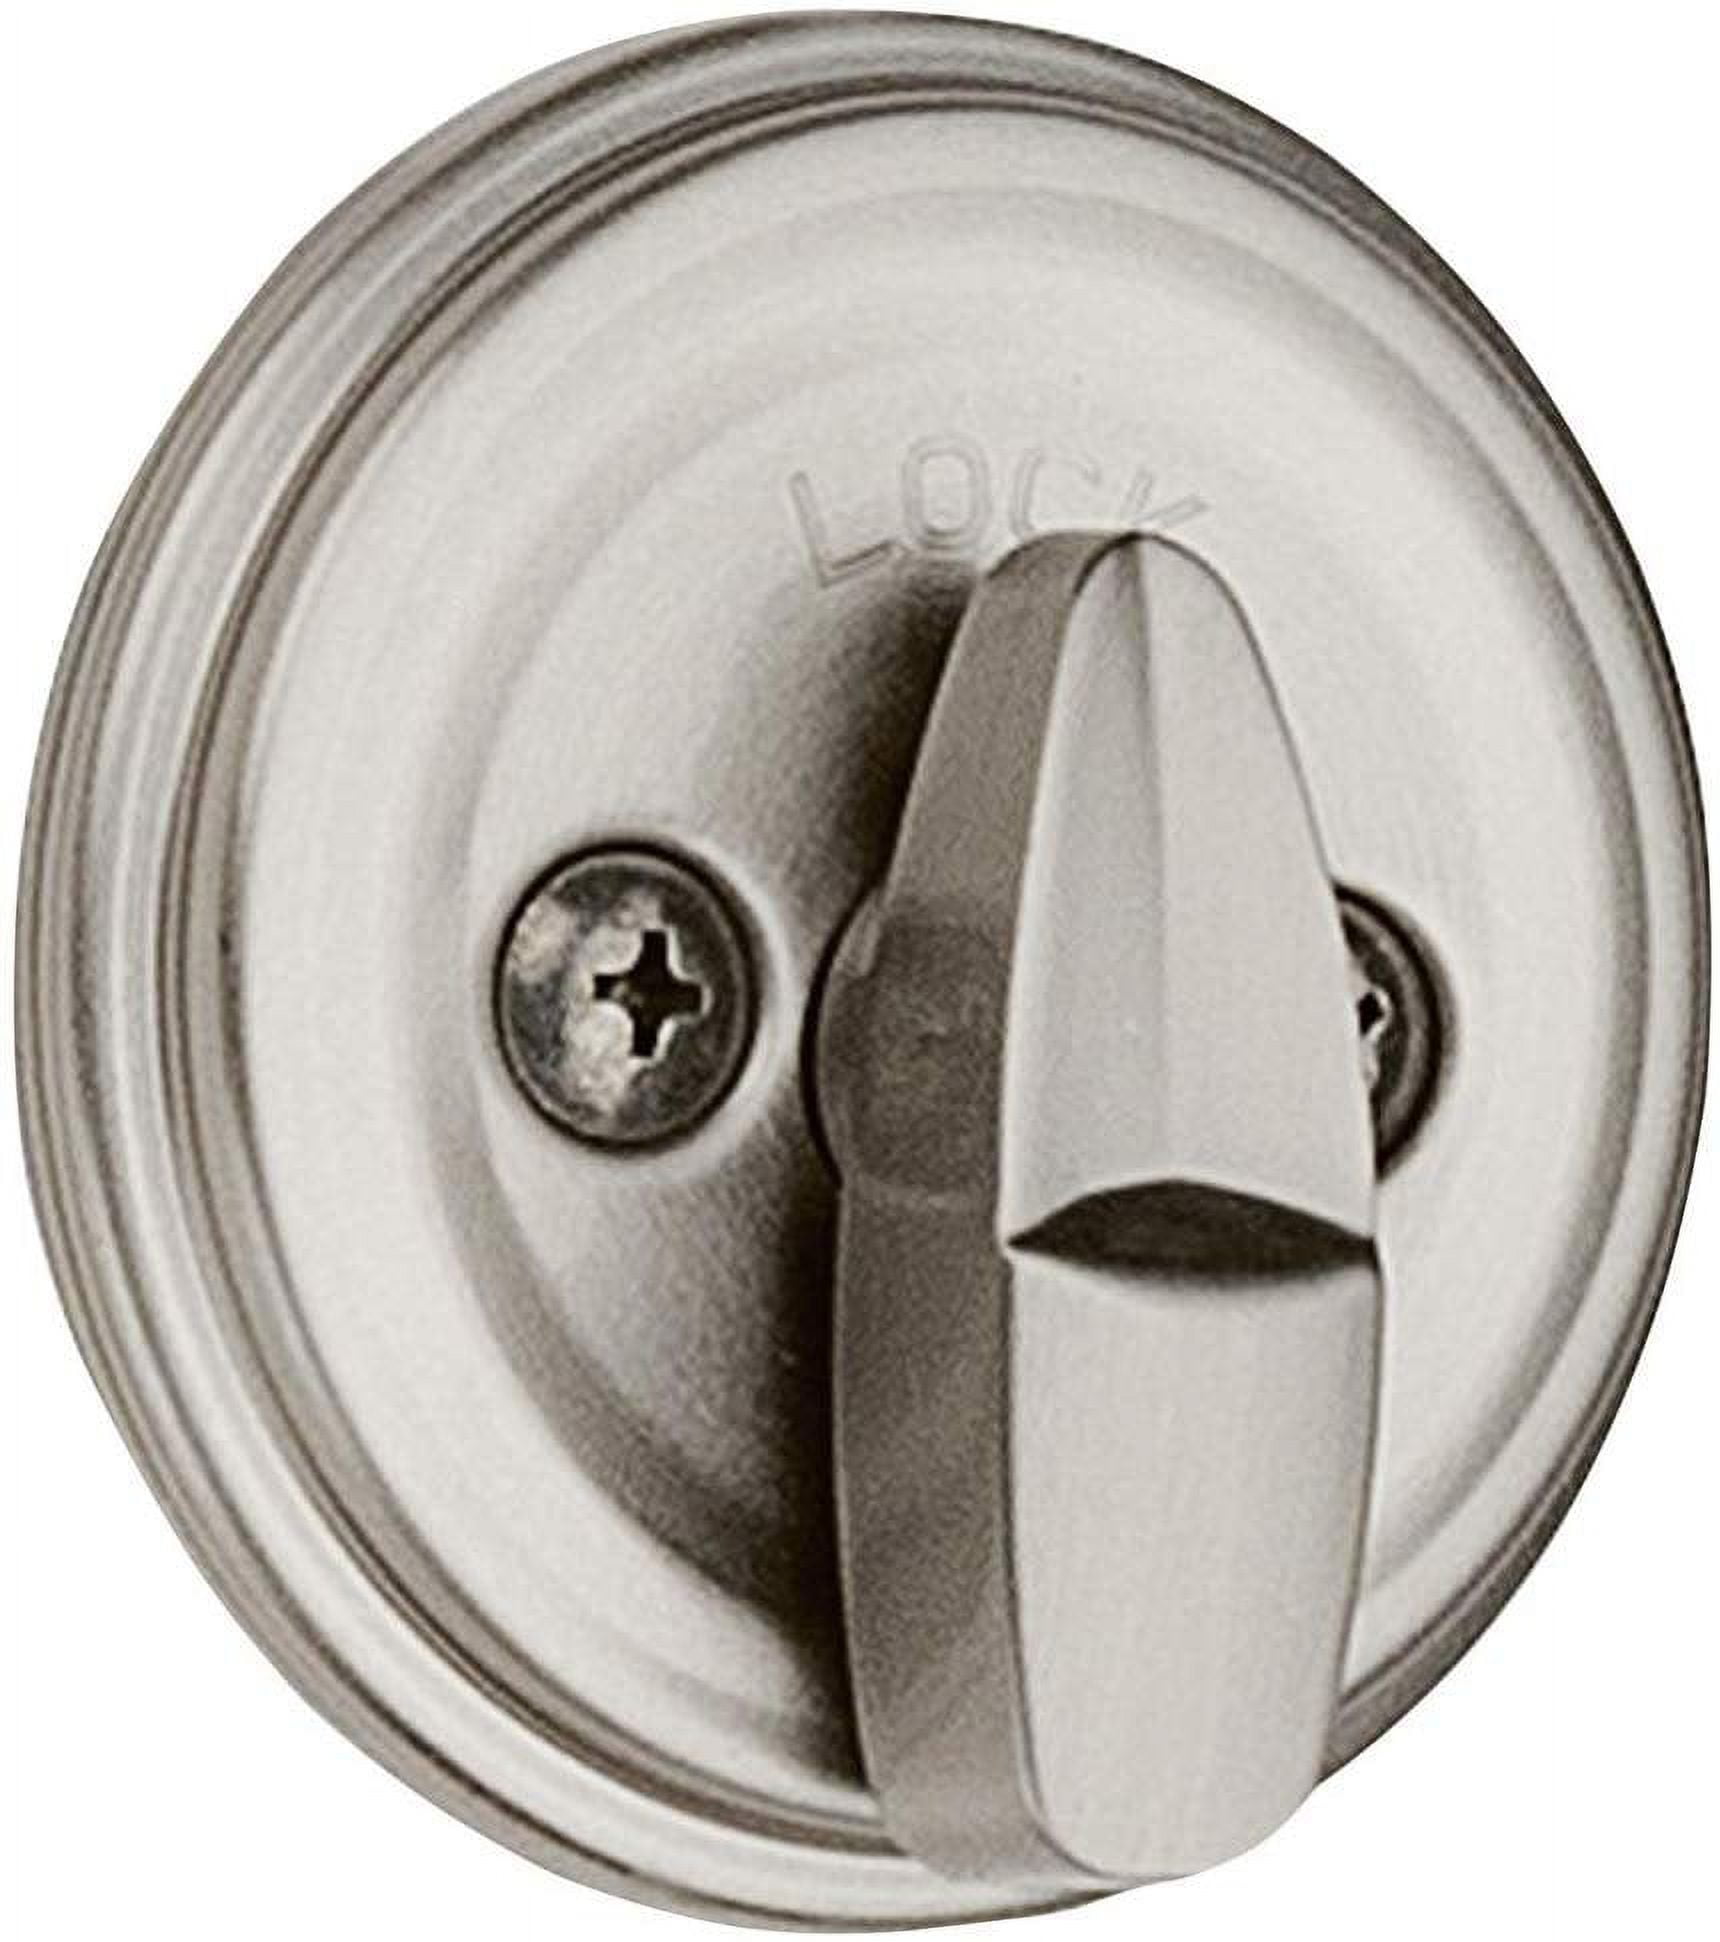 Kwikset 99800-090 980 Single Cylinder Round Traditional Deadbolt Door Lock  featuring SmartKey Security in Satin Nickel